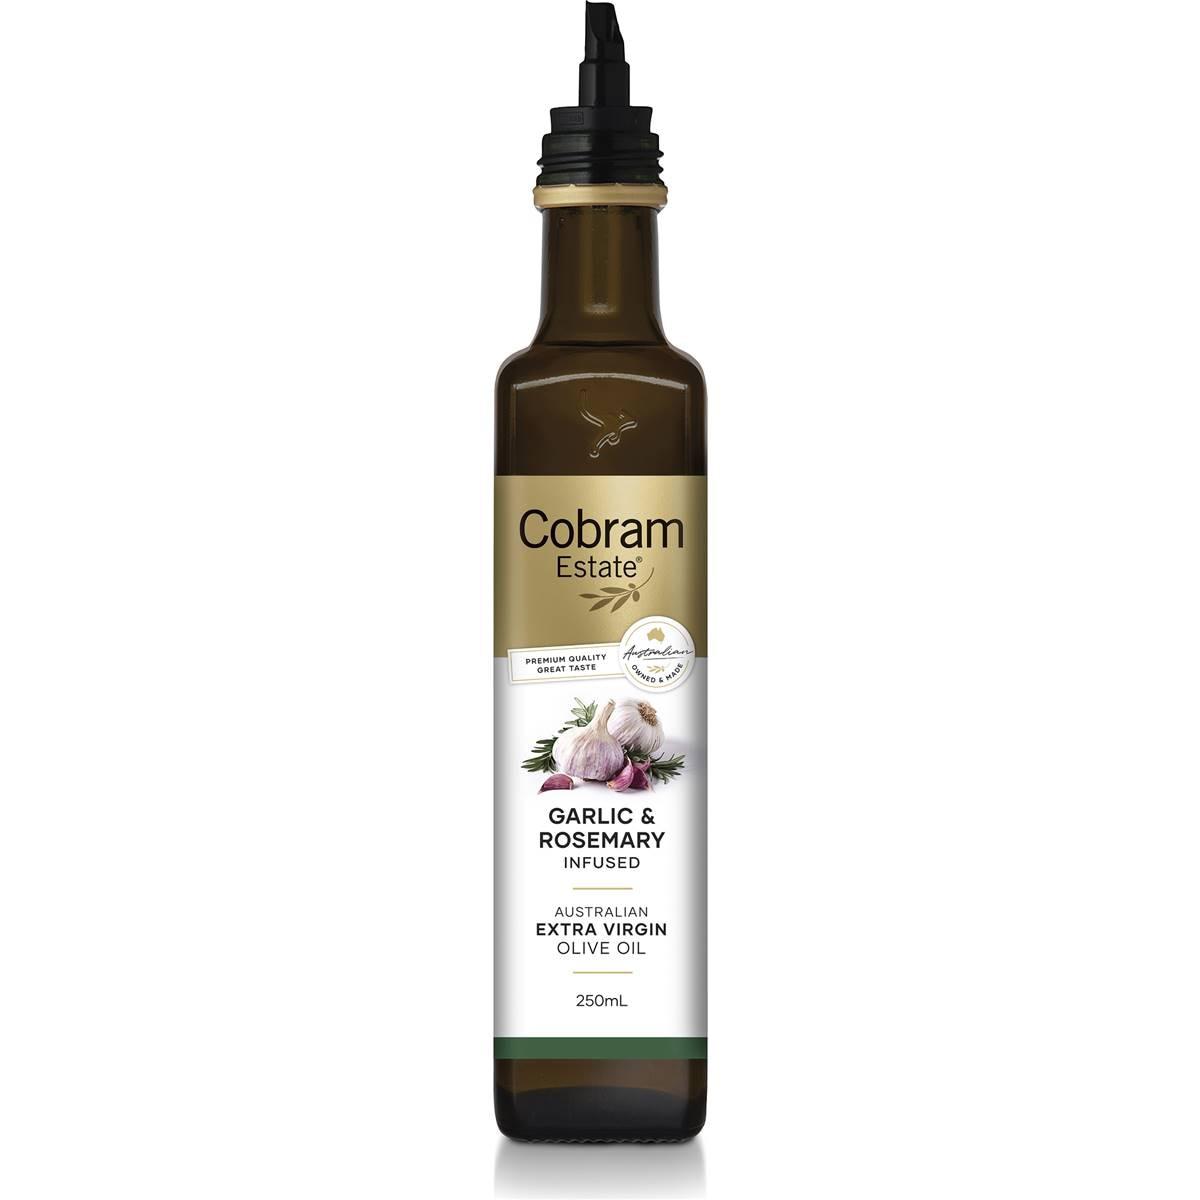 Cobram Estate Garlic & Rosemary Infused Olive Oil 250ml